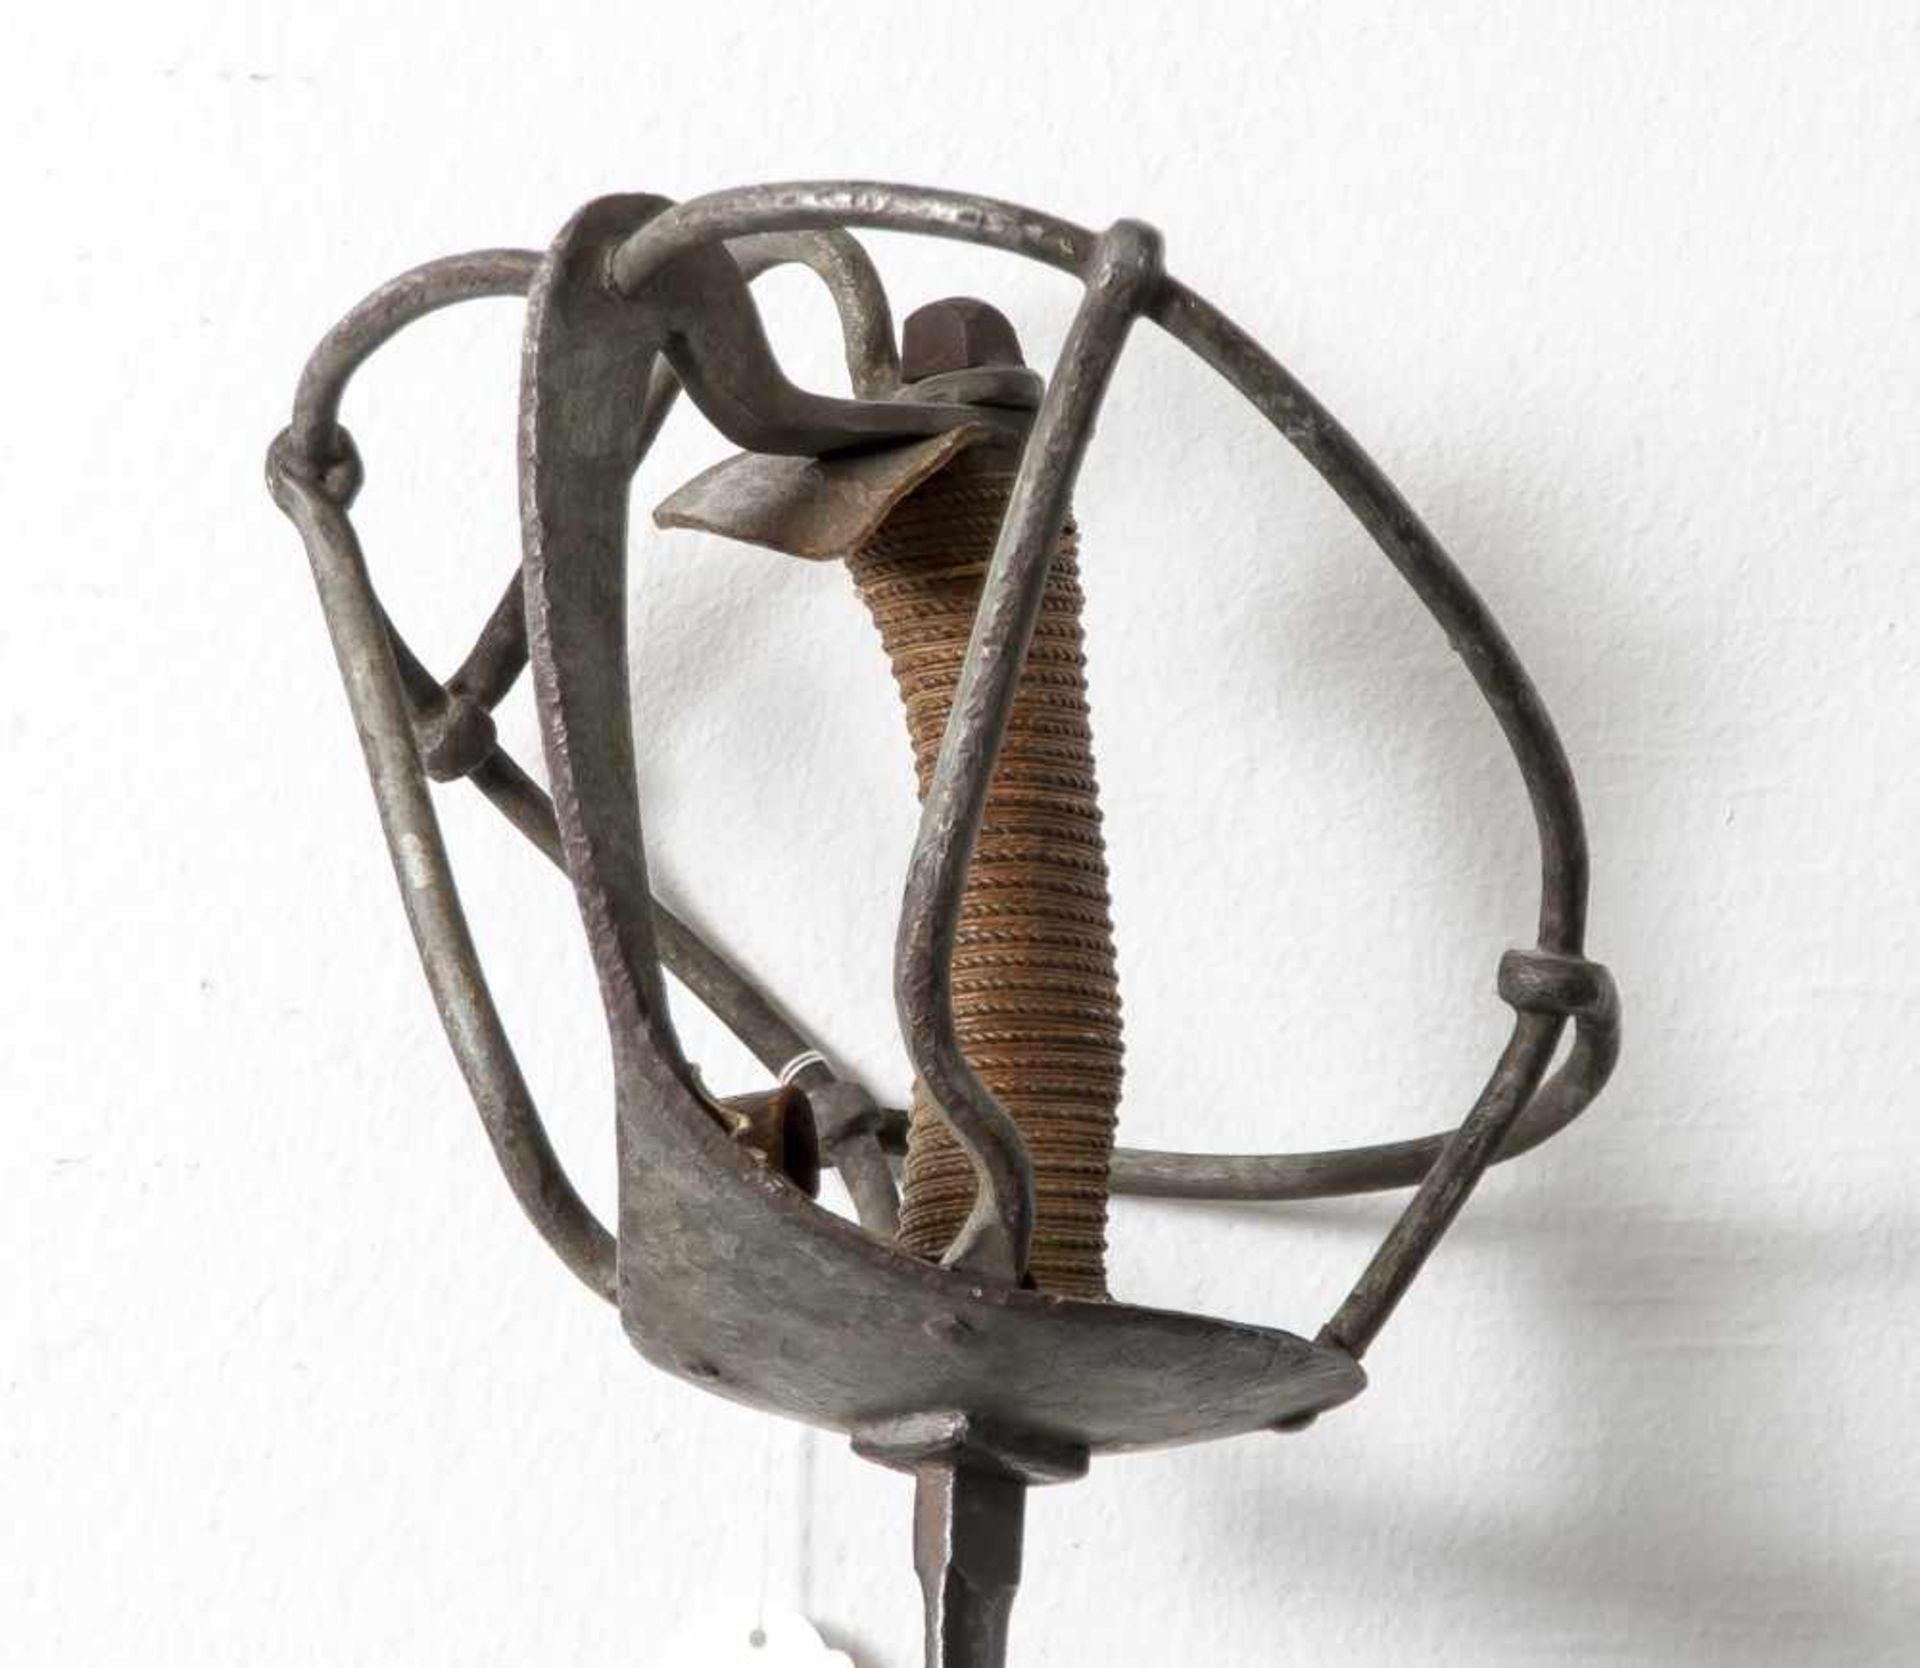 Korb- oder Glockenschläger (Mensurdegen), 19./20. Jahrhundert. L. ca. 106 cm, guter org. Zustand. - Image 2 of 2